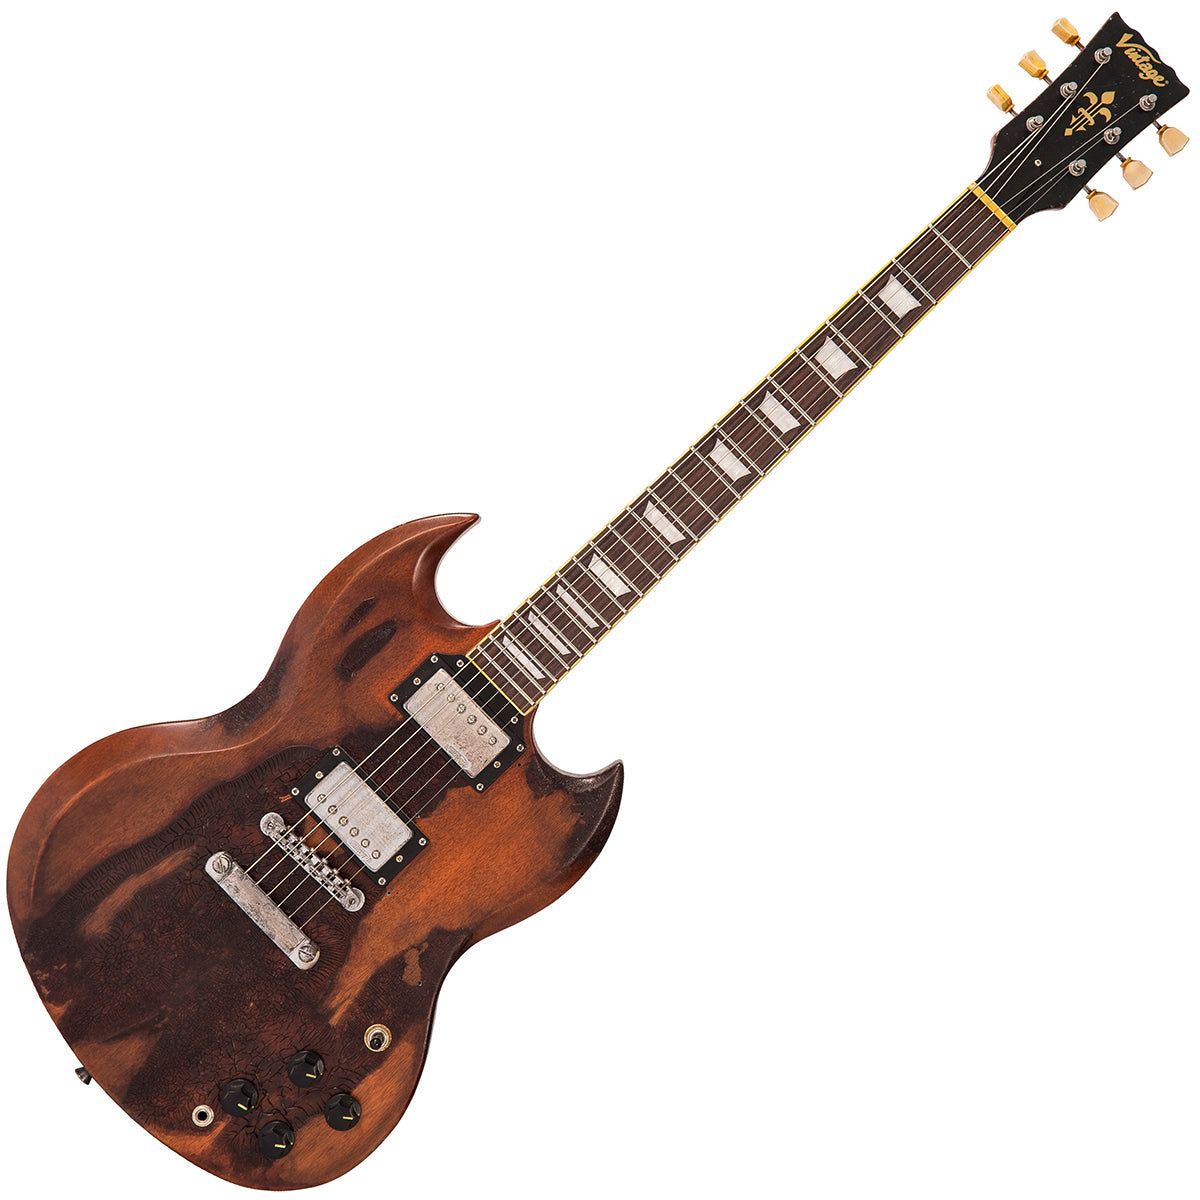 SOLD - Vintage VS6 ProShop Unique ~ Burnt Mahogany, Electric Guitars for sale at Richards Guitars.